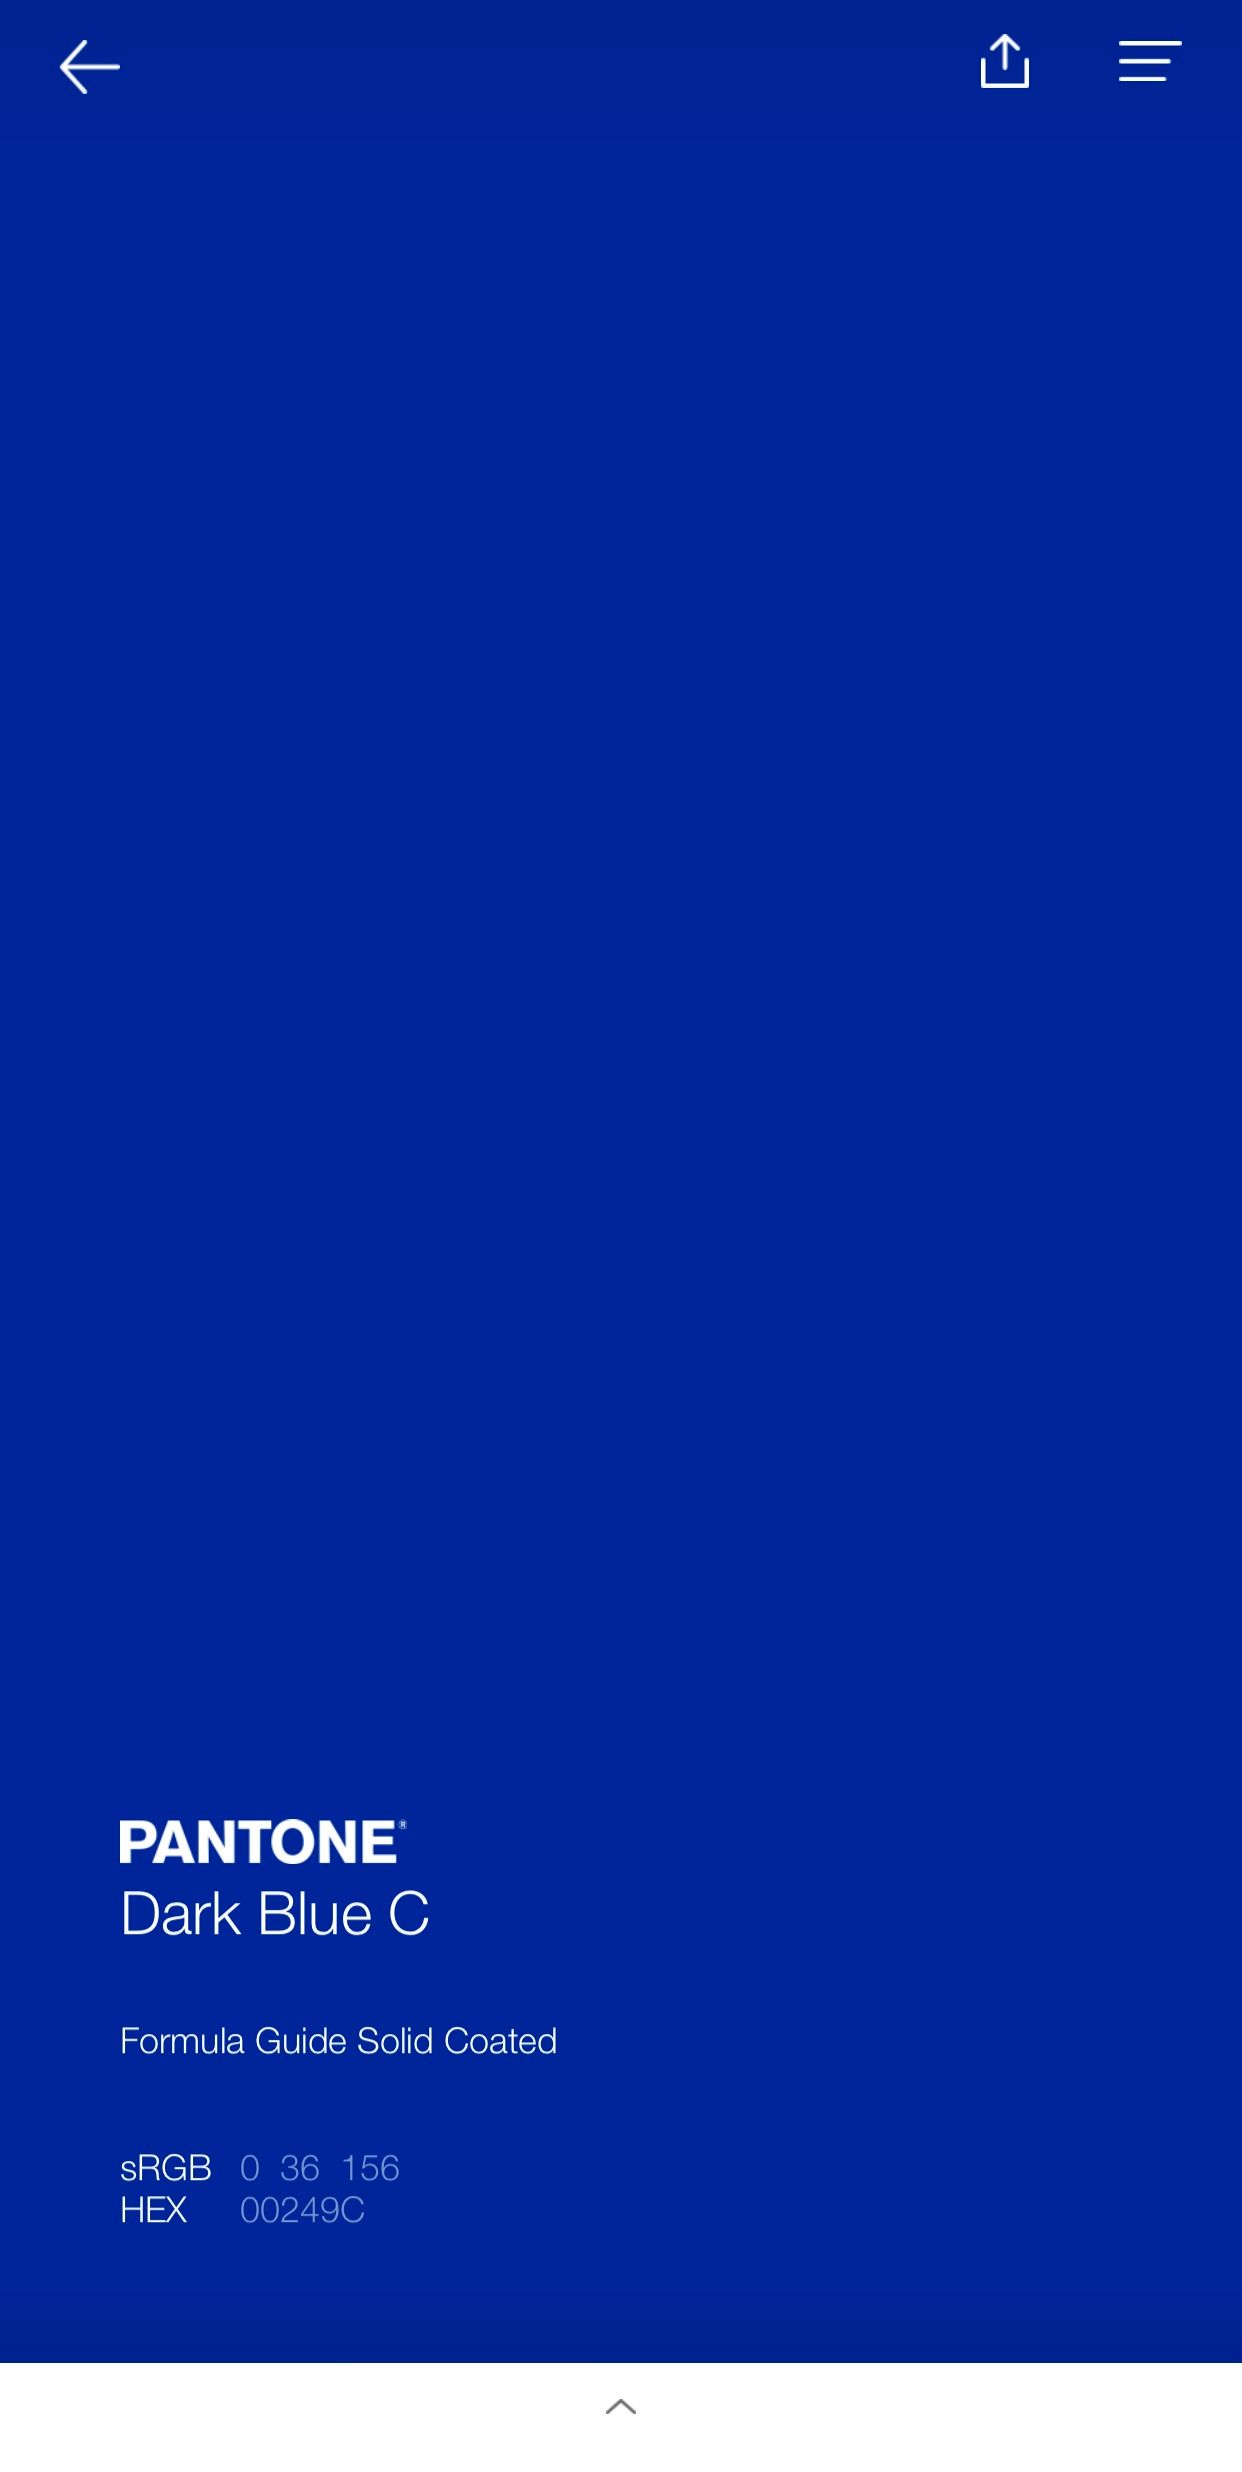 Solid, dark blue background of Pantone color Dark Blue C